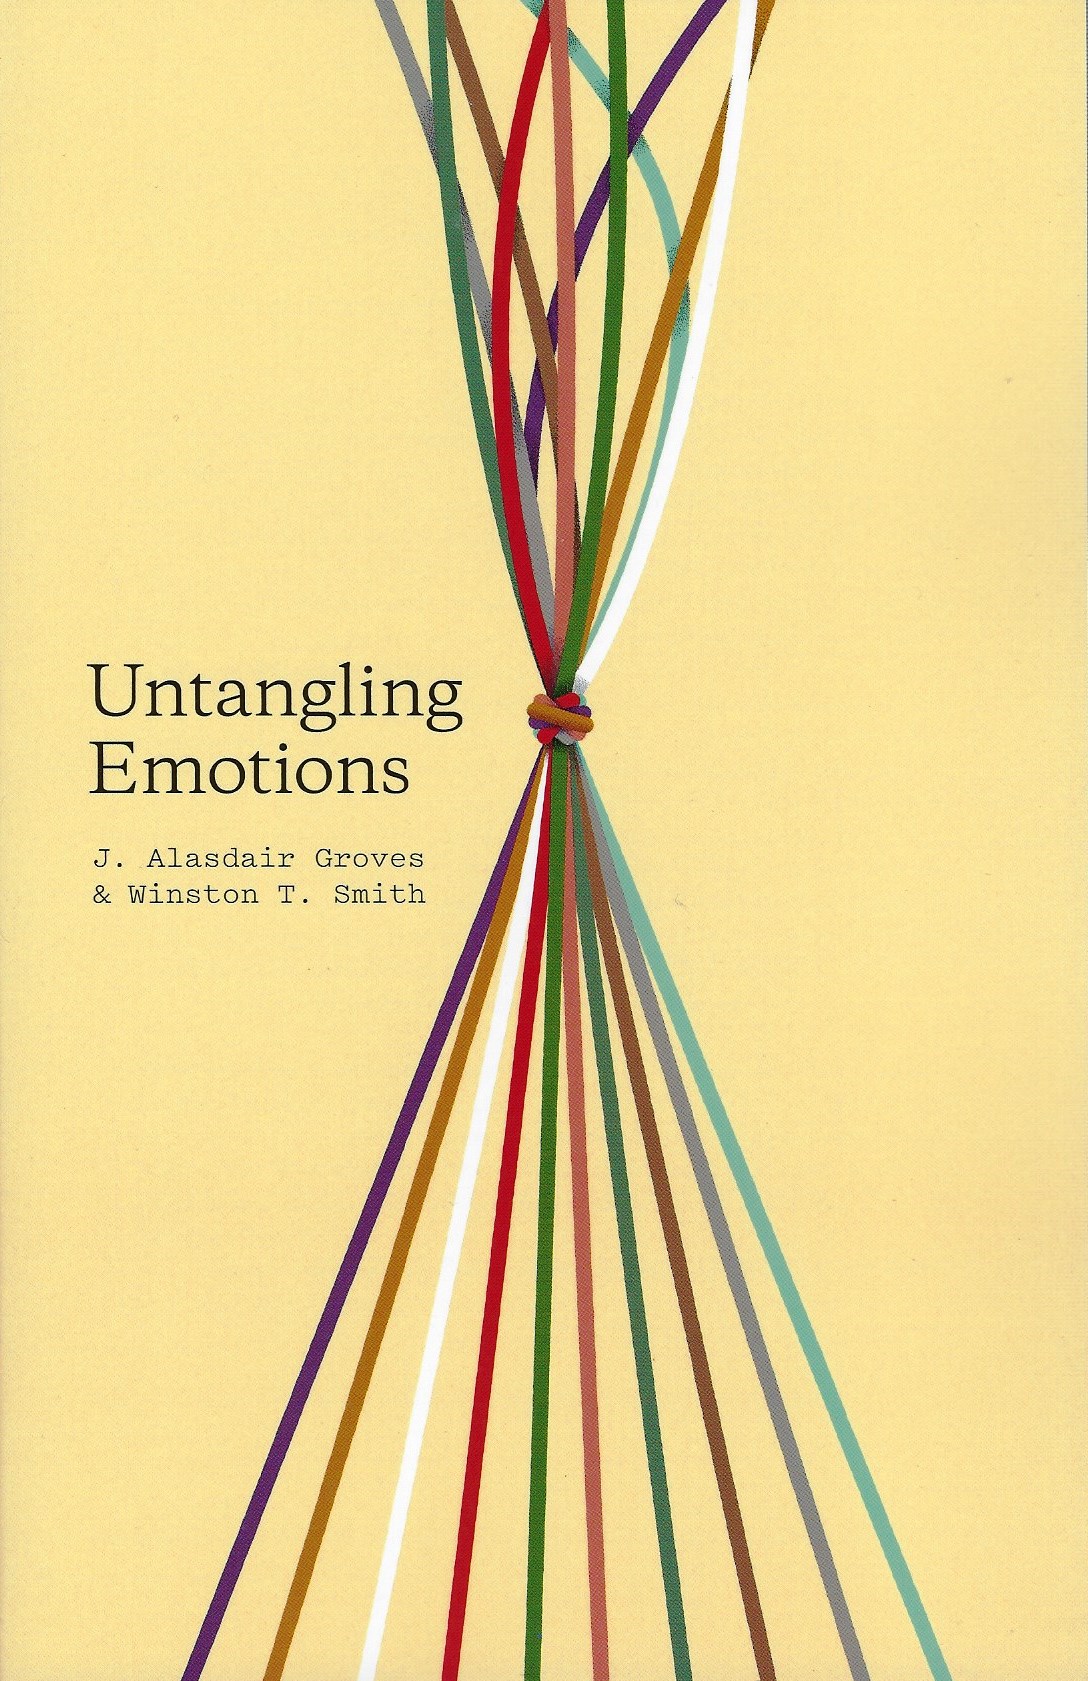 UNTANGLING EMOTIONS J. Alasdair Groves & Winston T. Smith